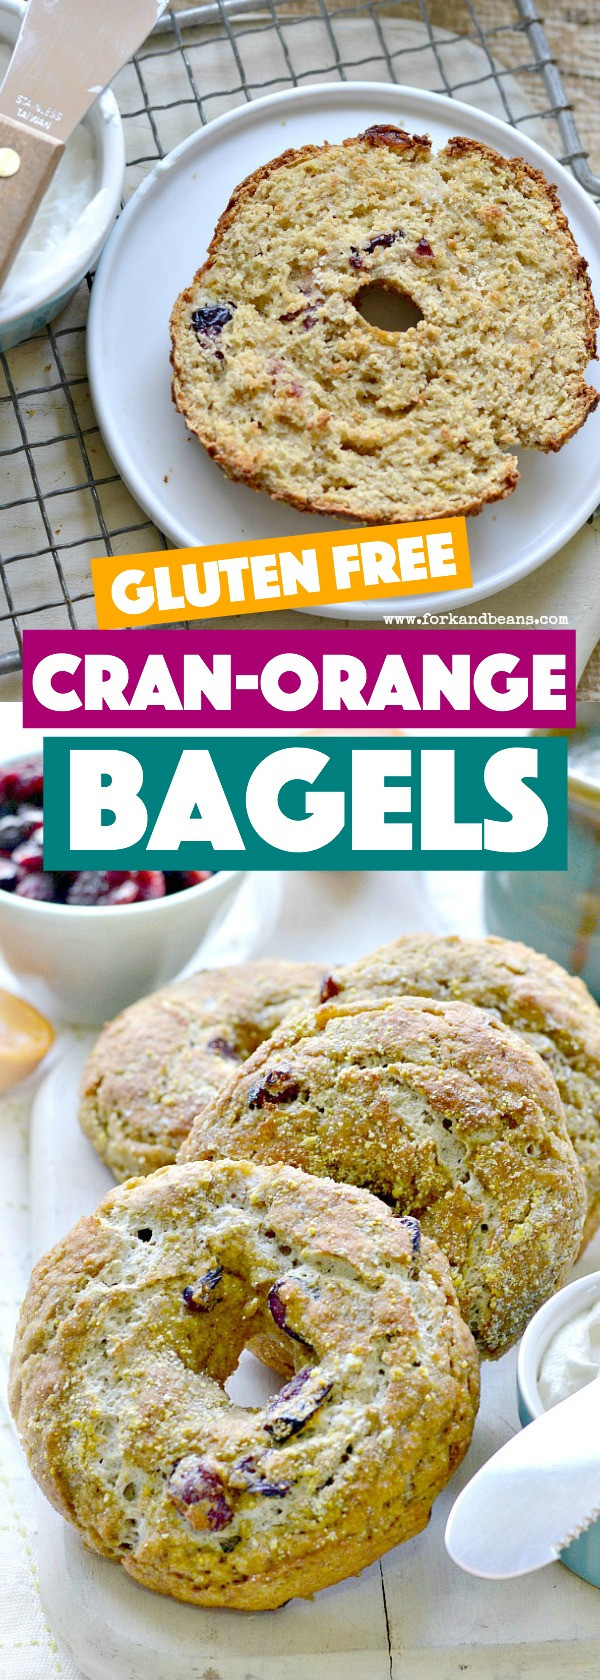 Gluten Free Vegan Bagels
 Gluten Free Vegan Cranberry Orange Bagels Fork and Beans